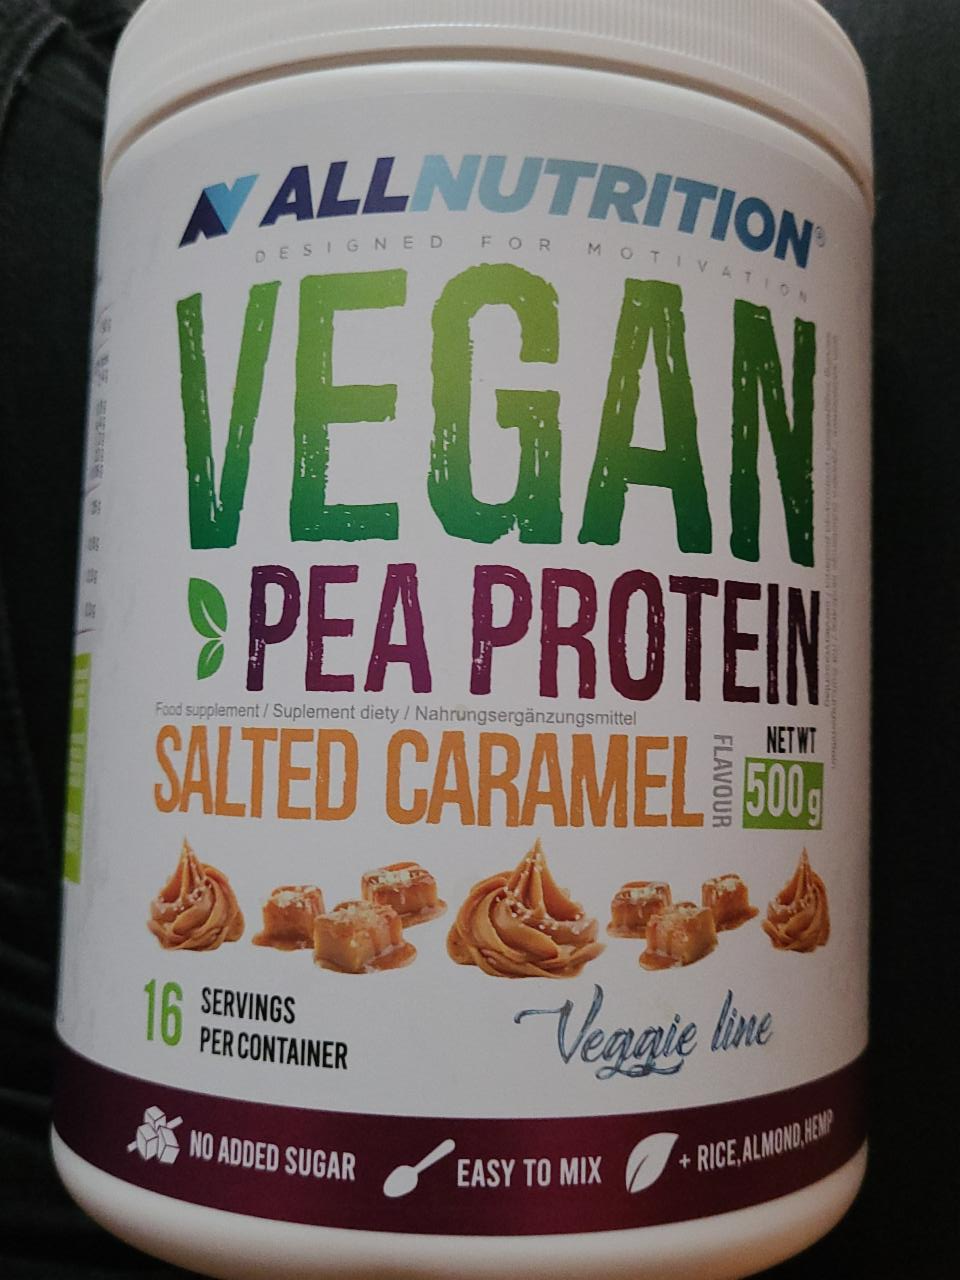 Zdjęcia - Vegan pea protein salted caramel Allnutrition